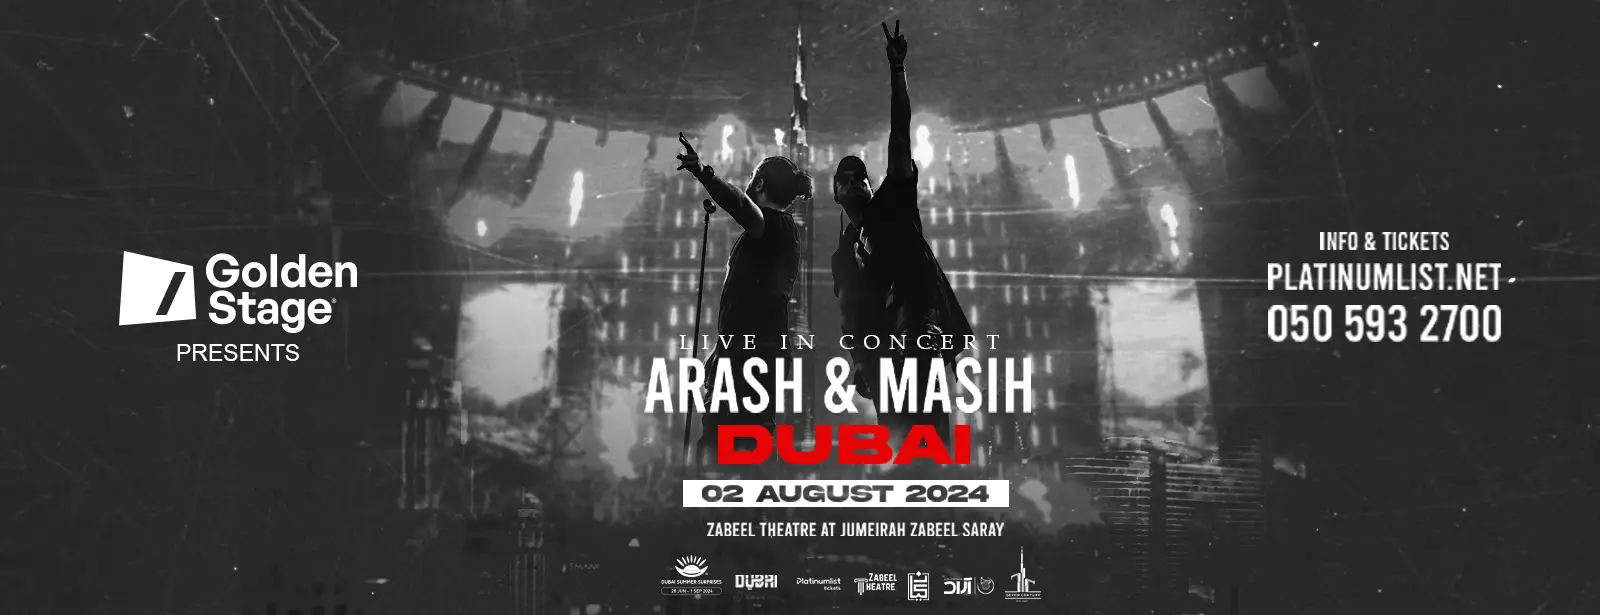 Arash and Masih Concert at Zabeel Theatre, Dubai || Wow-Emirates